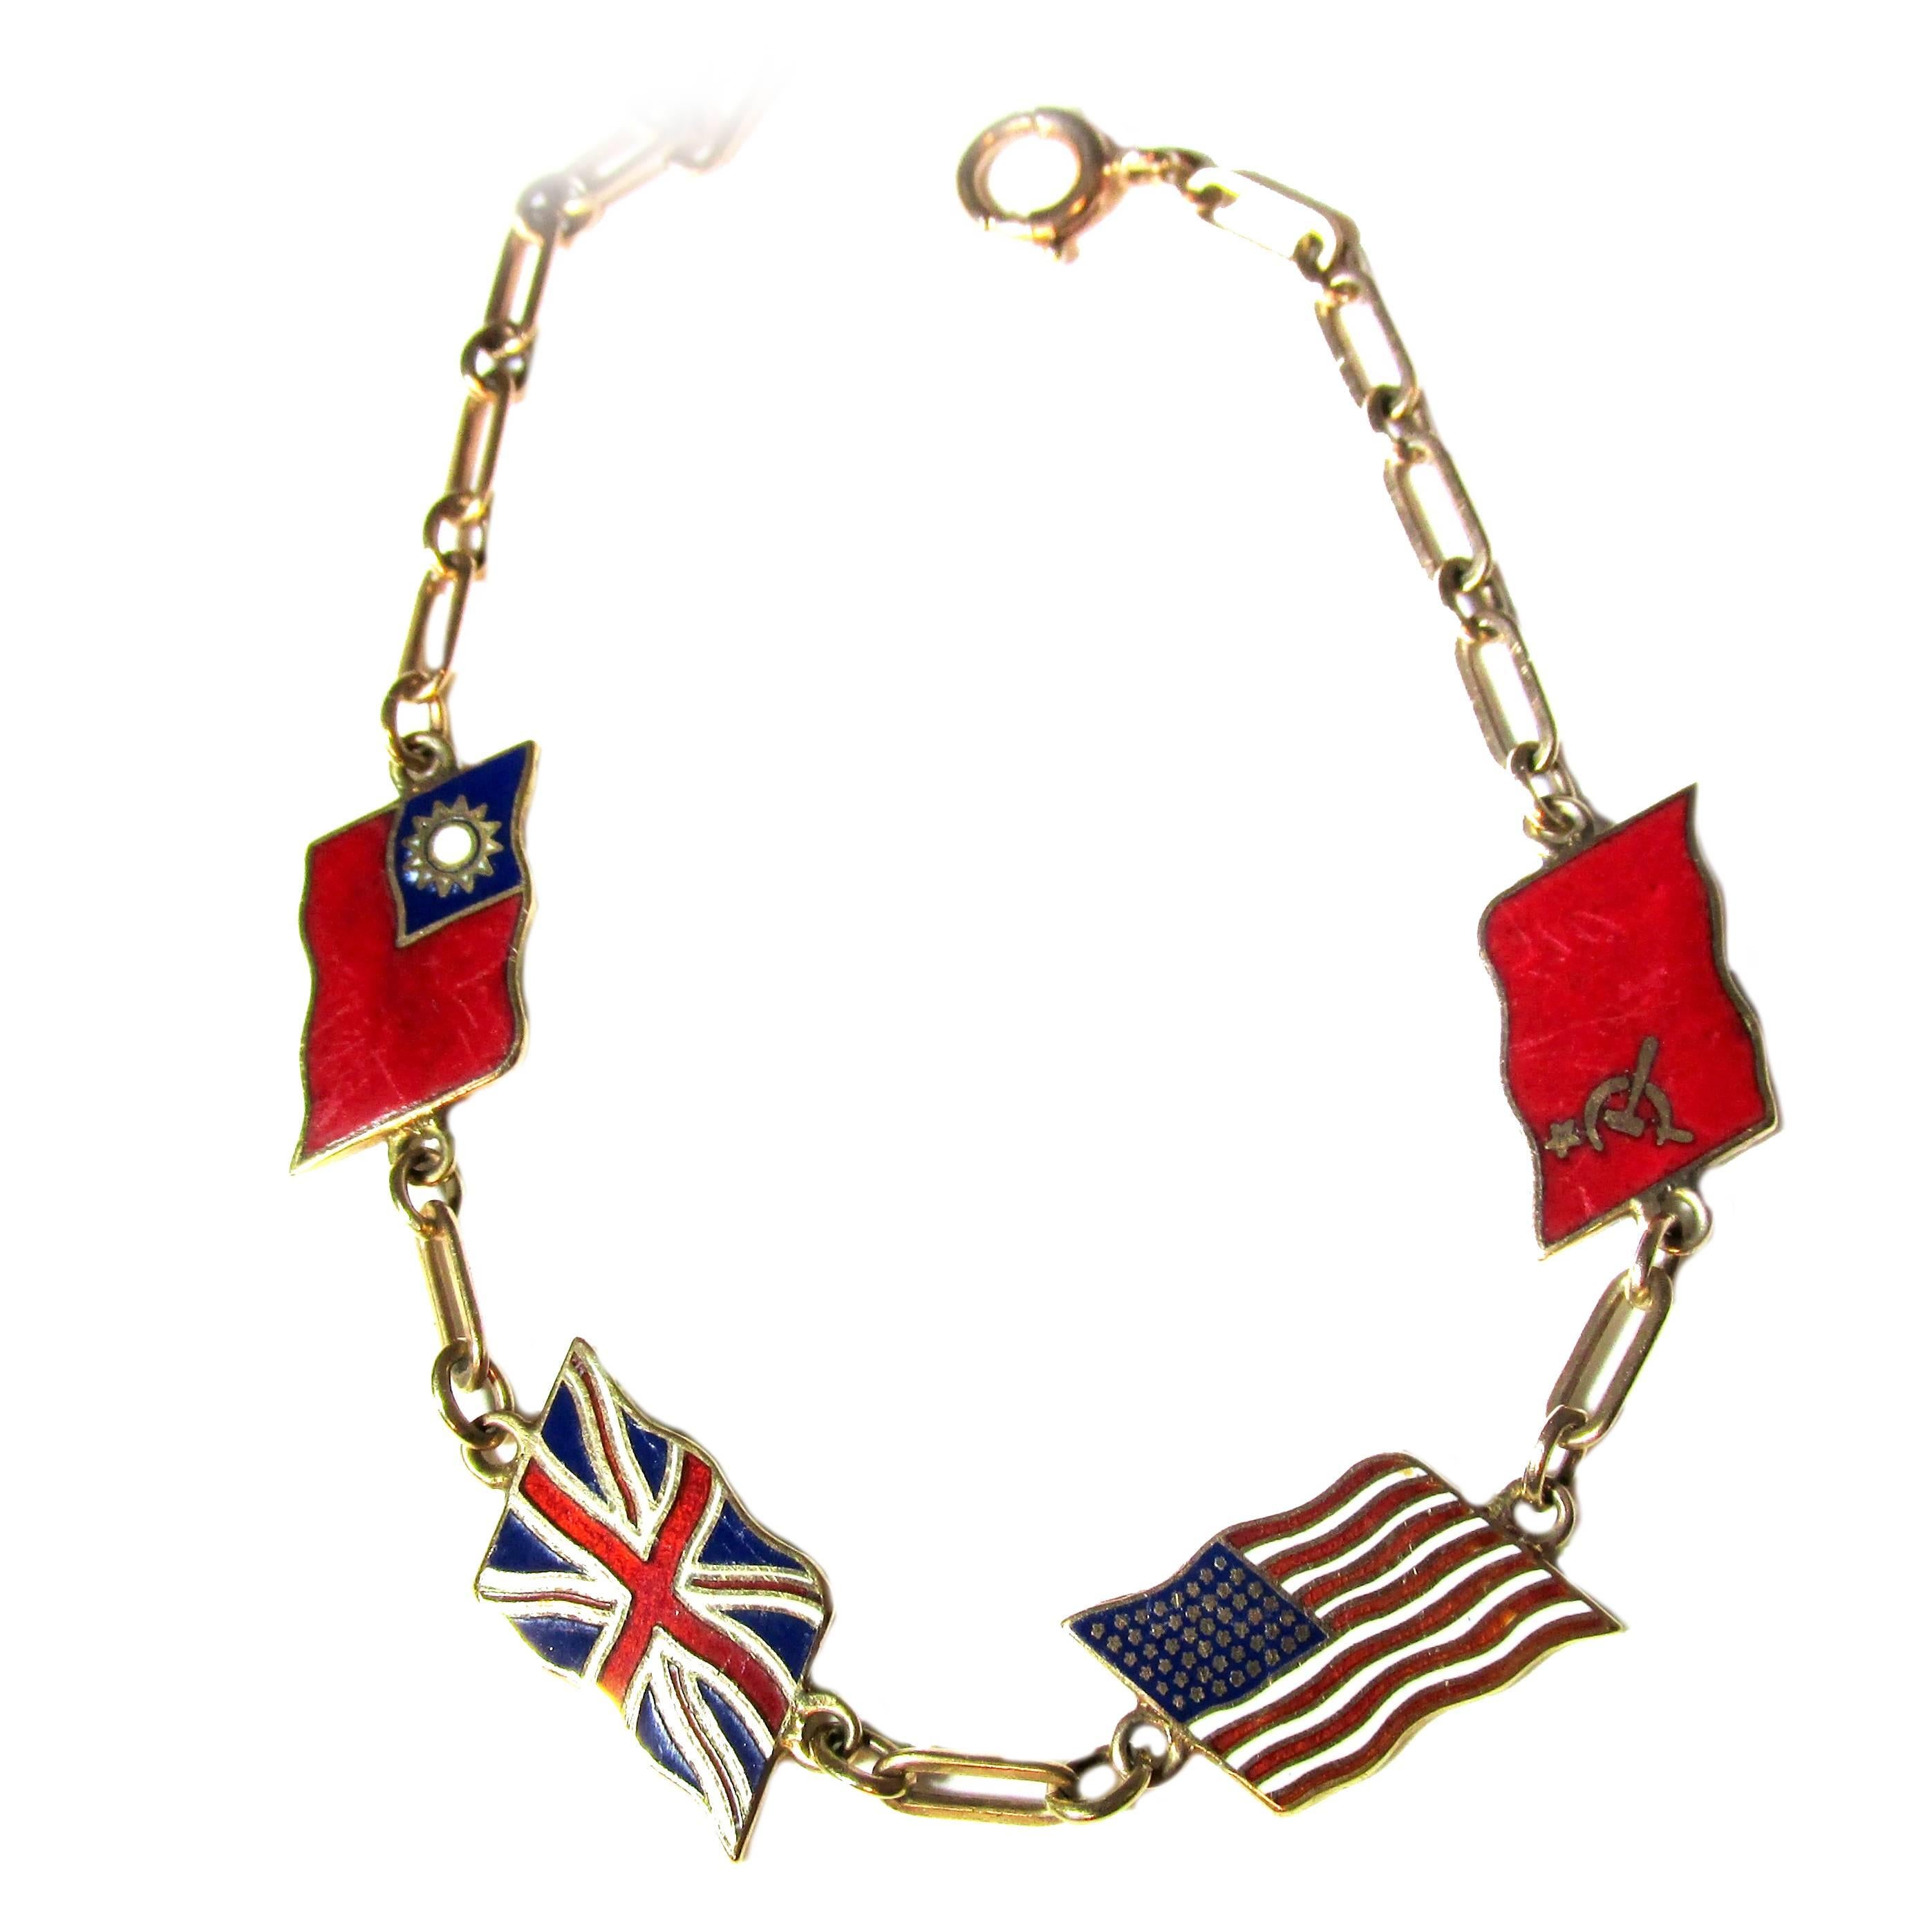 1945 World War II flag motif bracelet